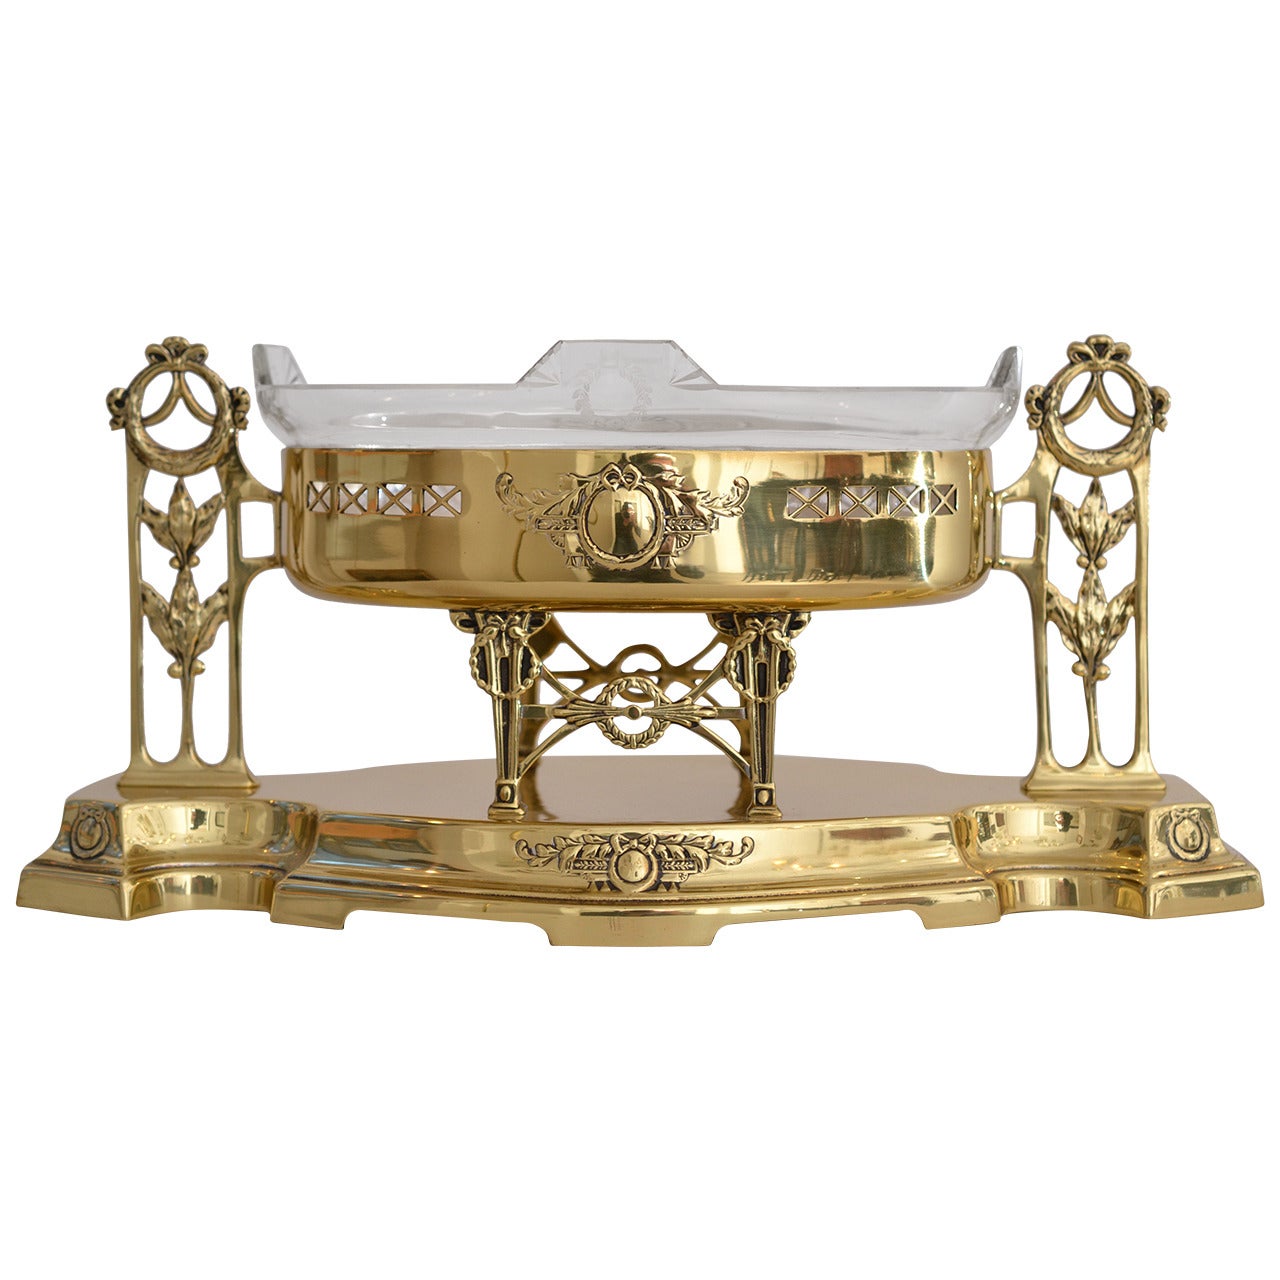 Argentor Brass Centerpiece with Original Glass